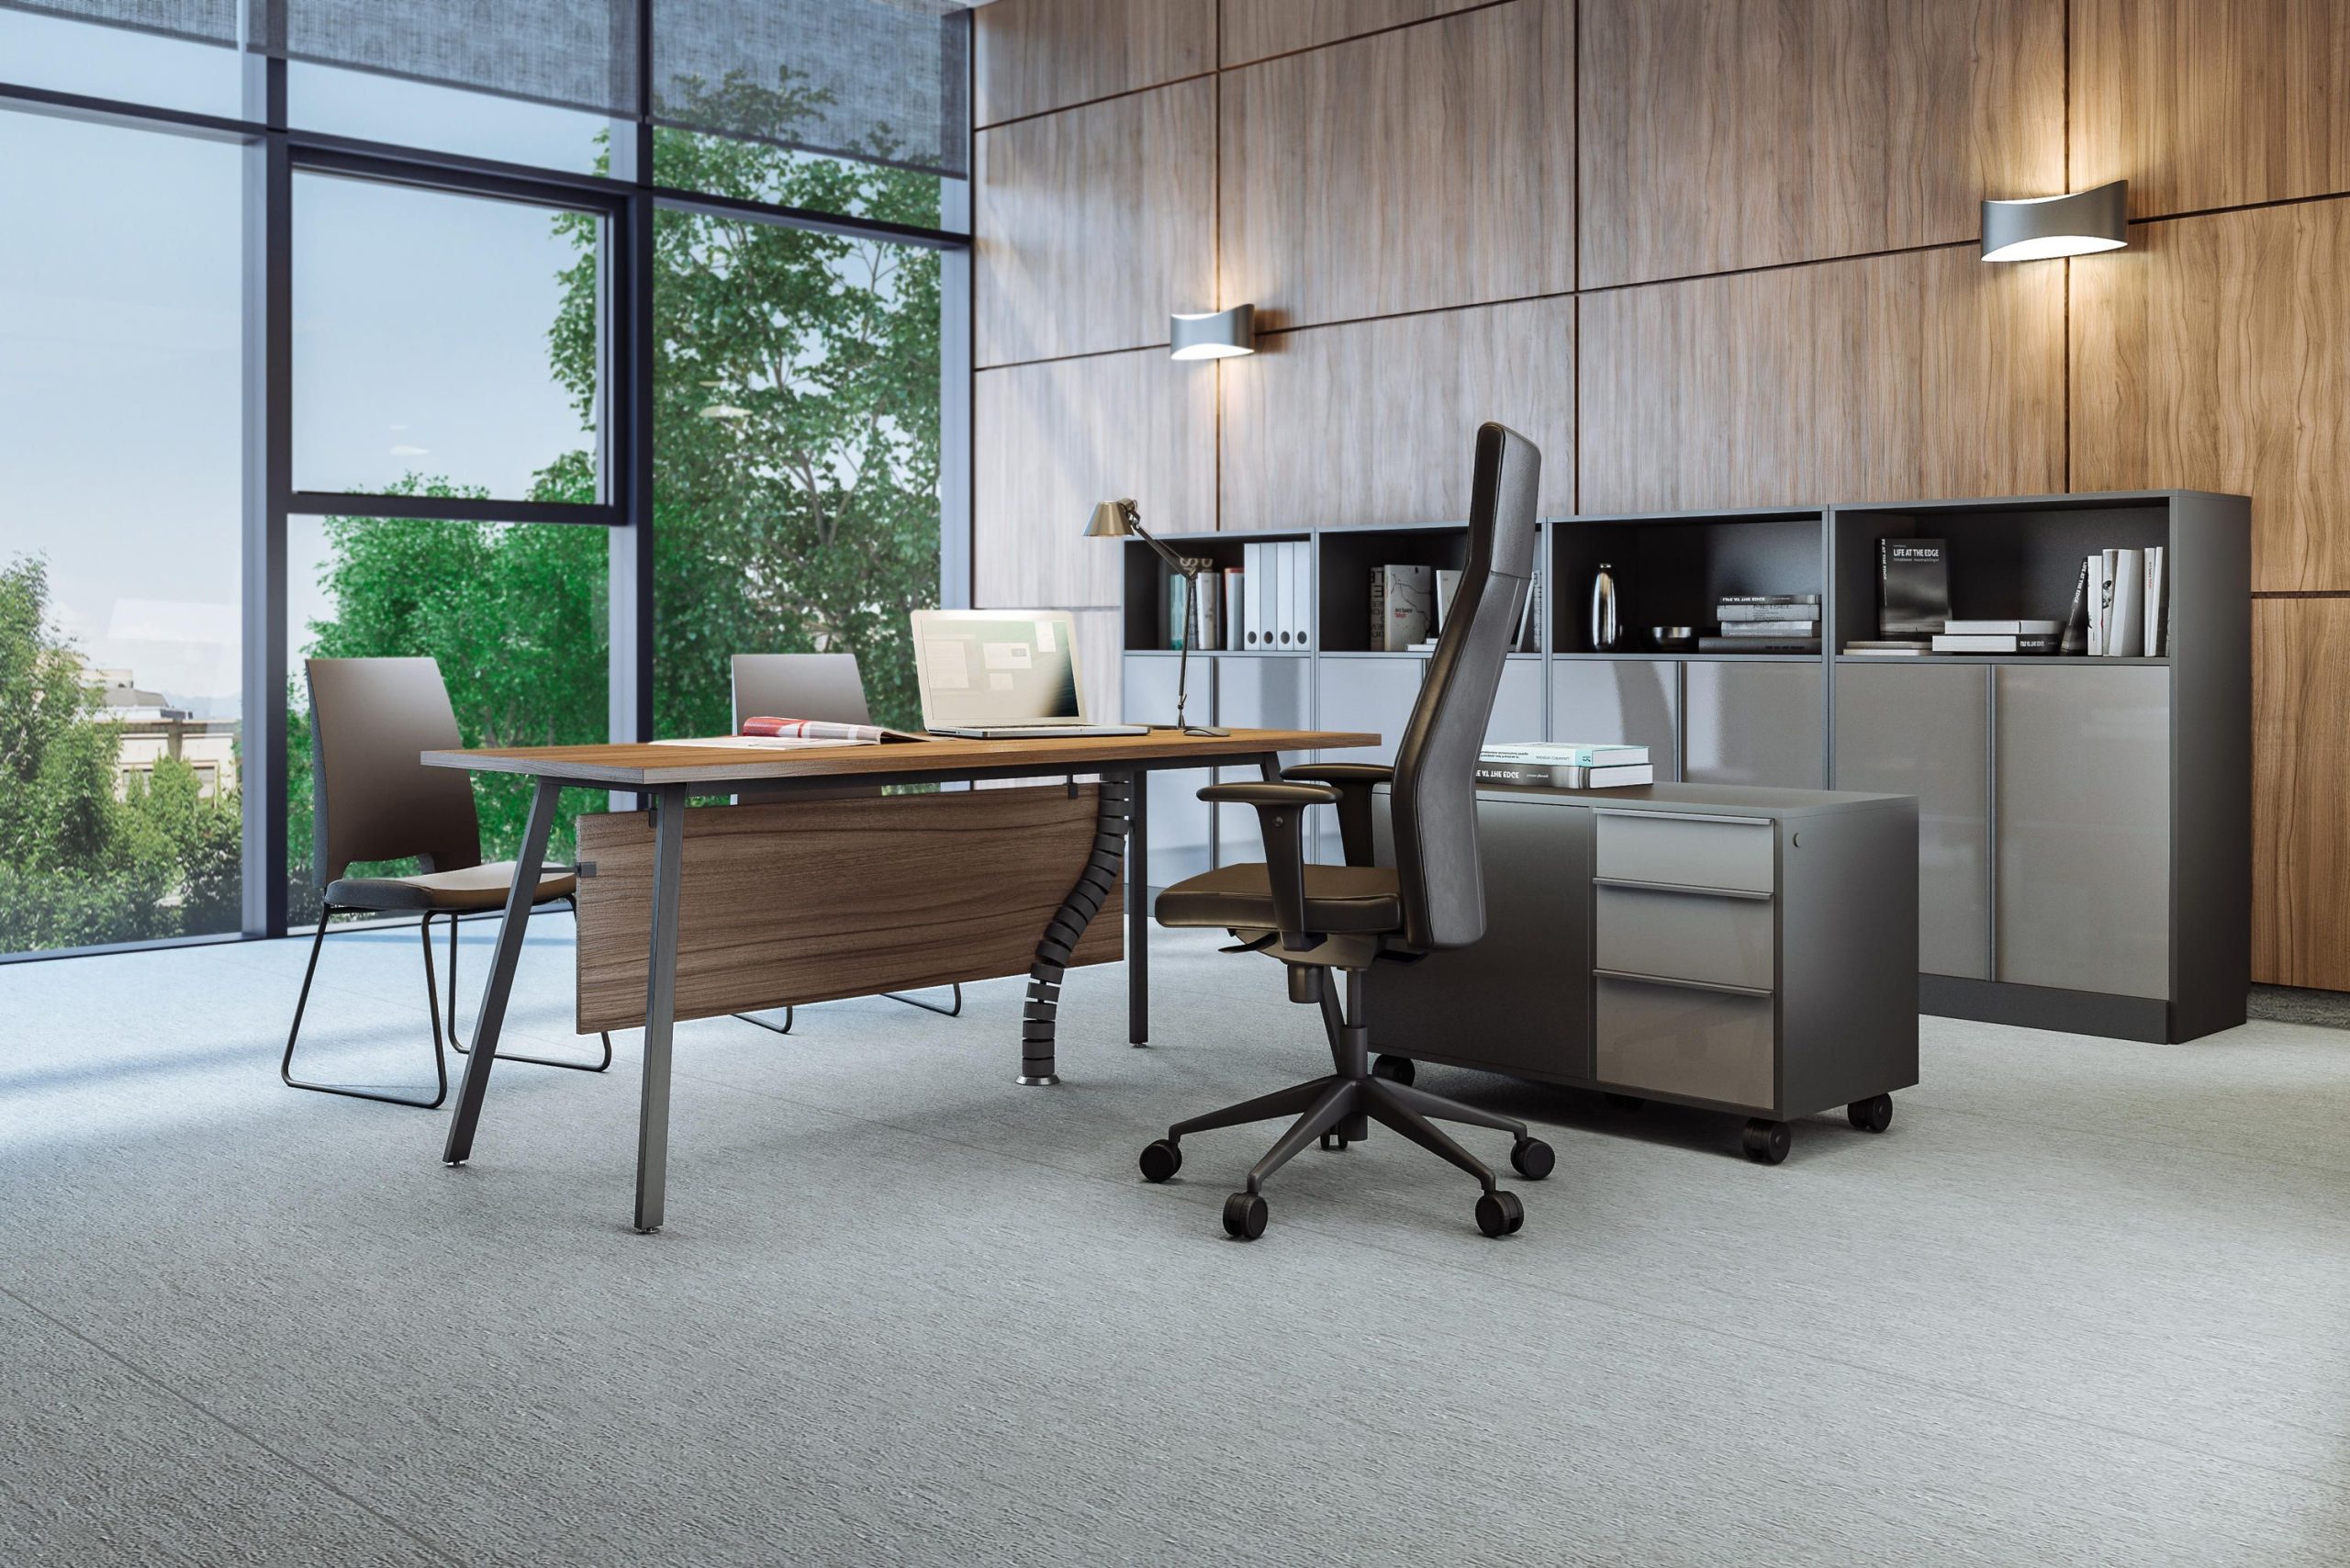 Stylish Design Trends in Modern Office Furniture